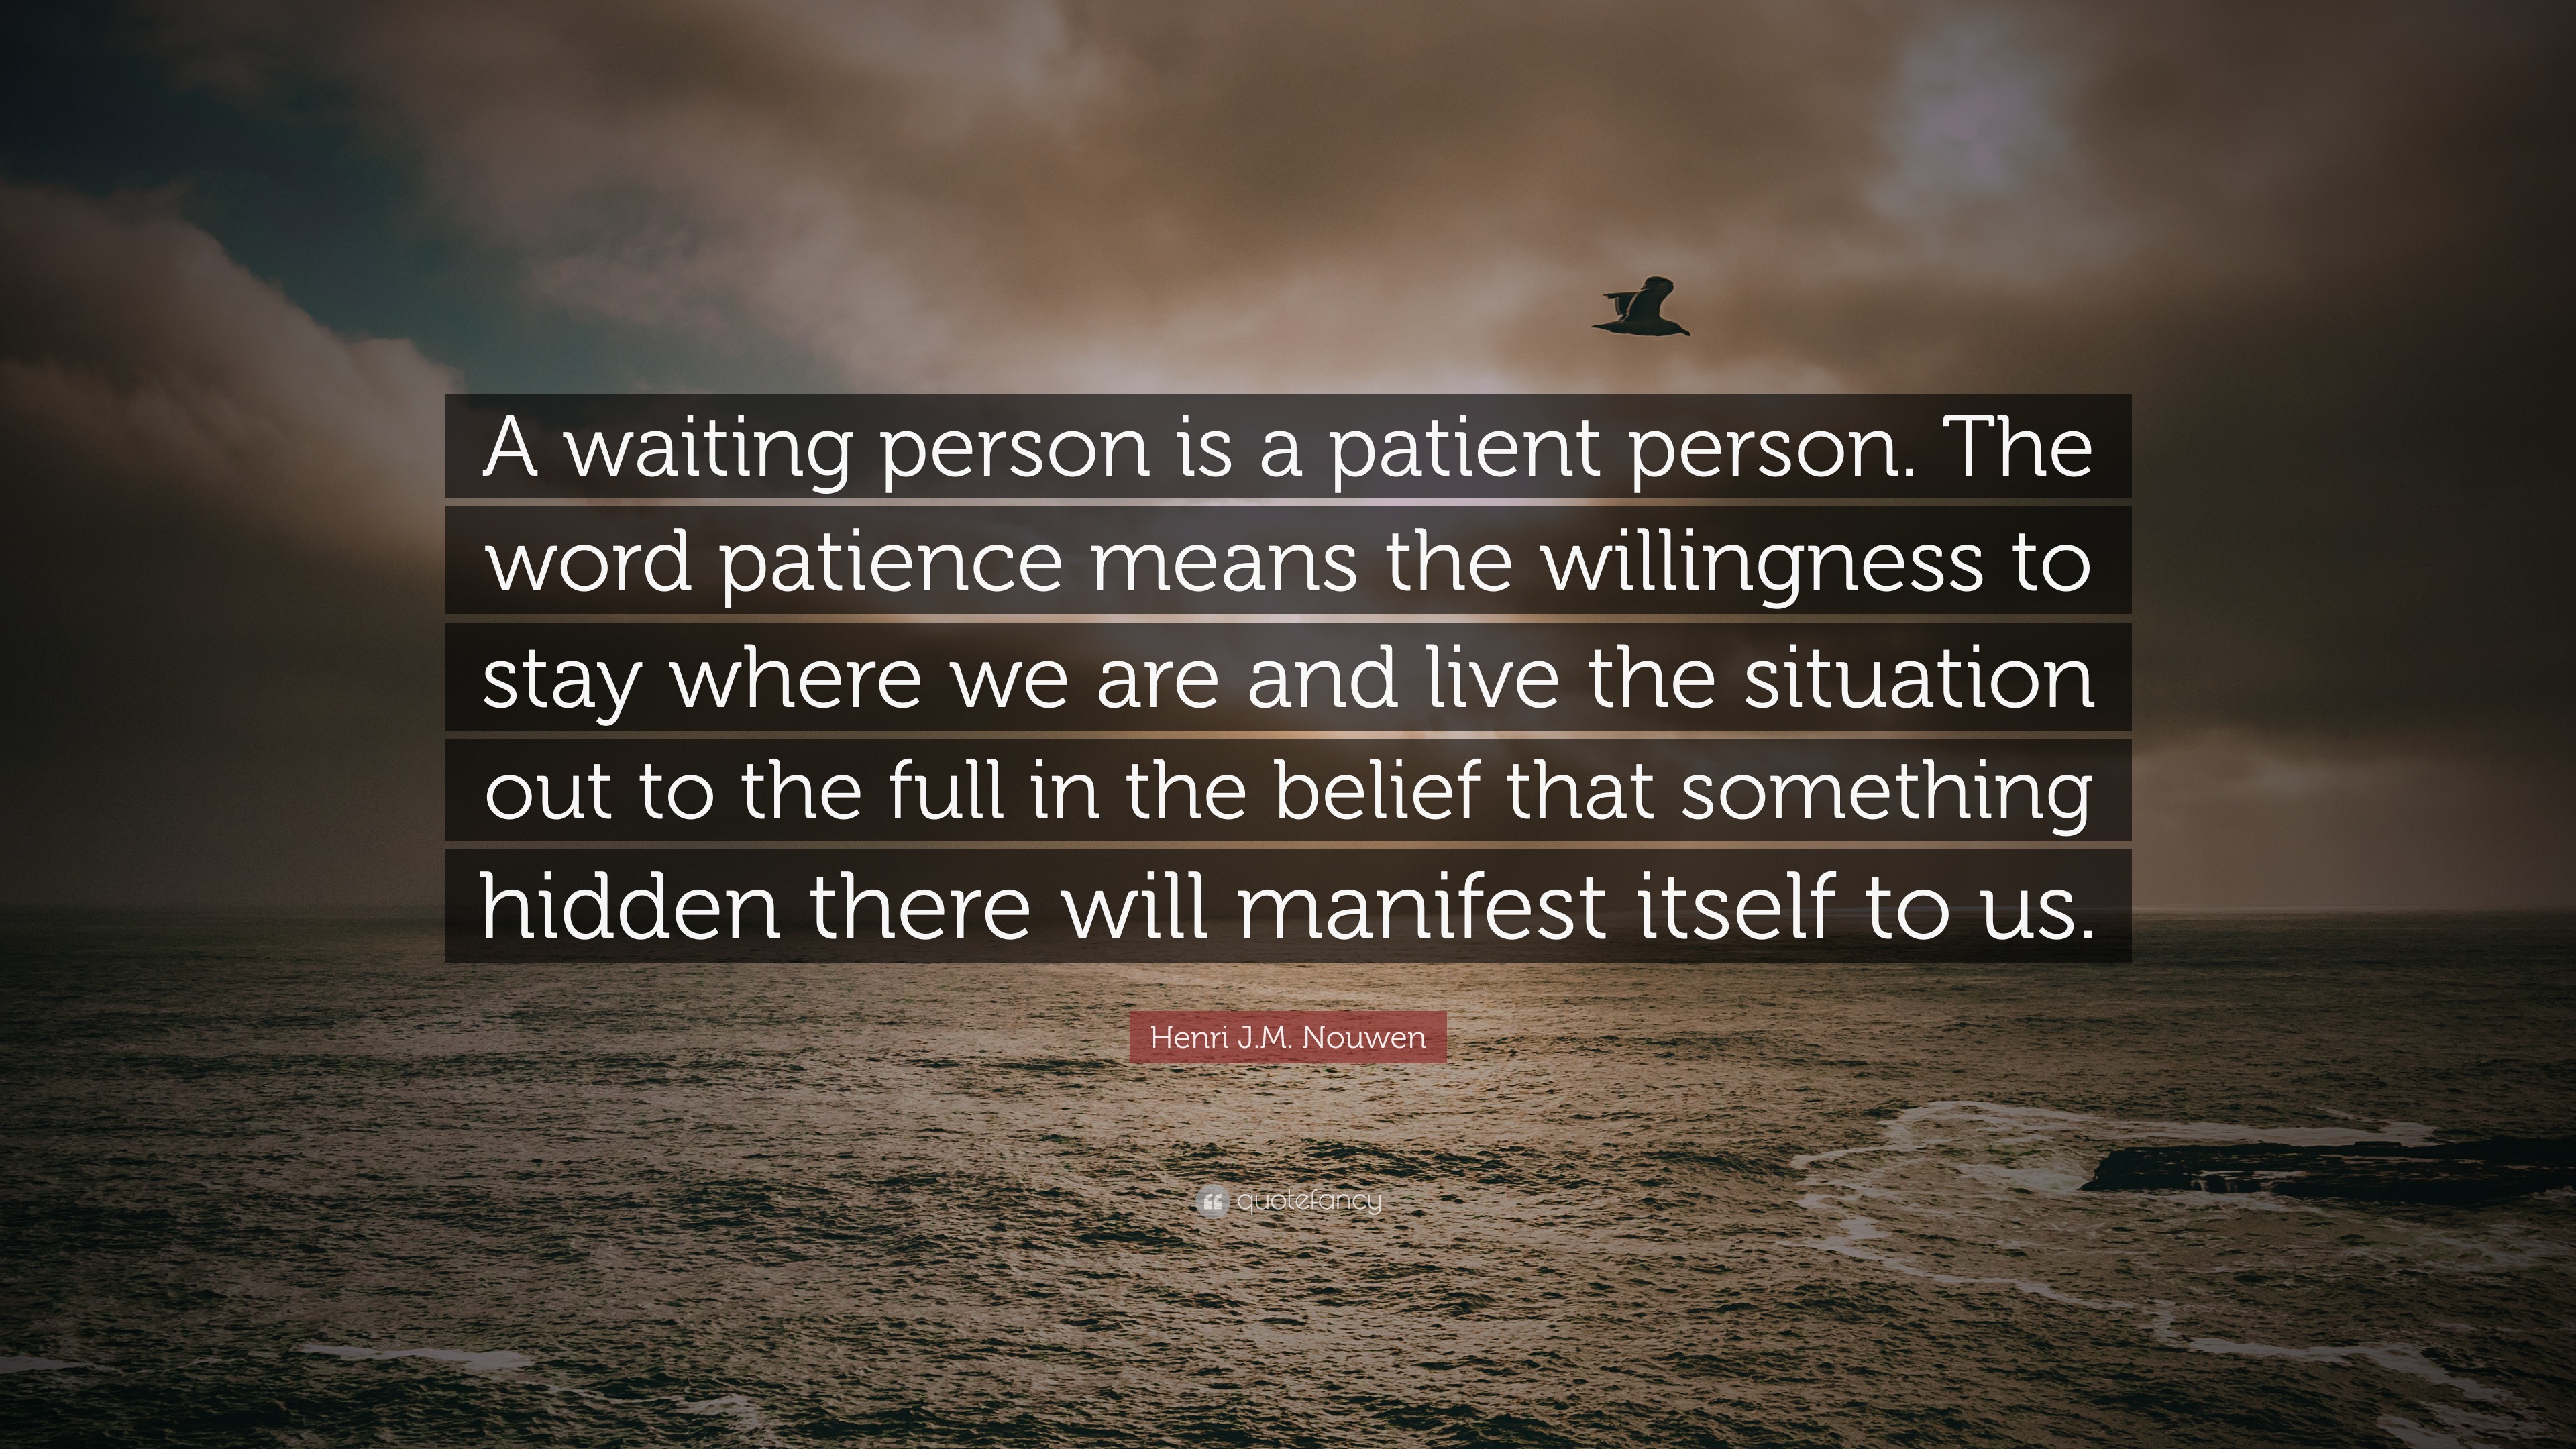 patient person waiting